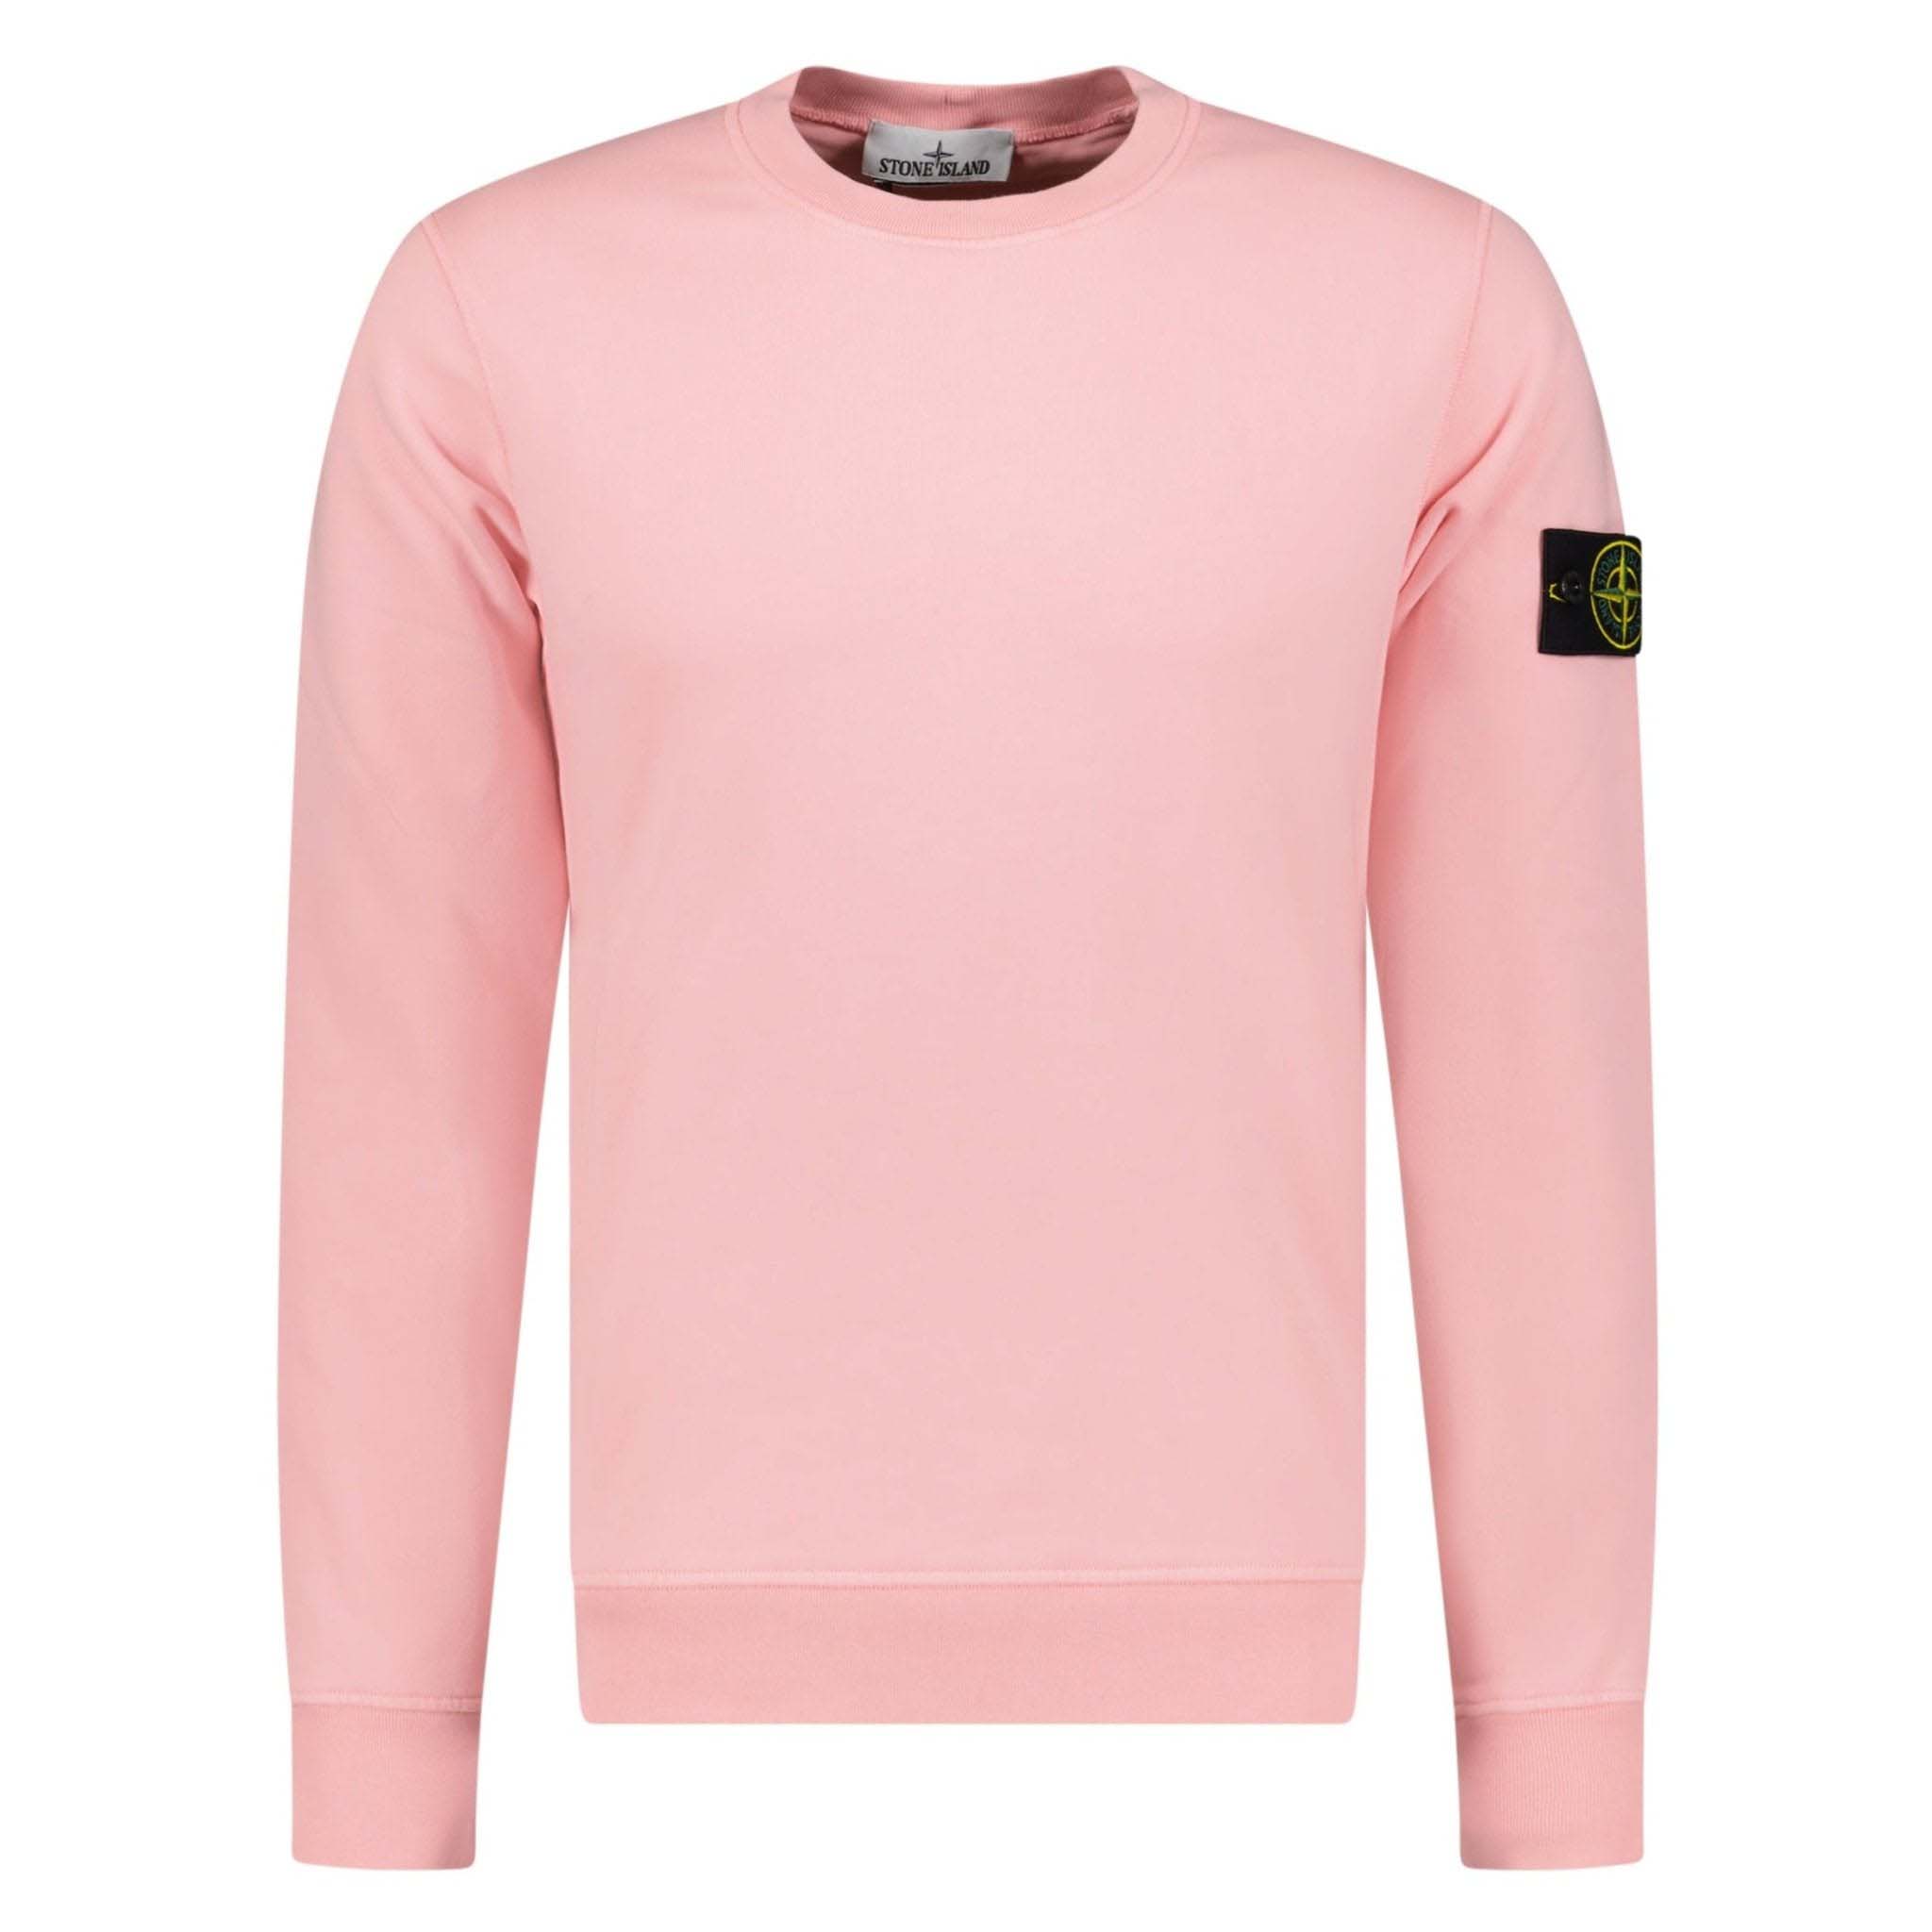 Stone Island Logo Sweatshirt Pink メンズ - JP